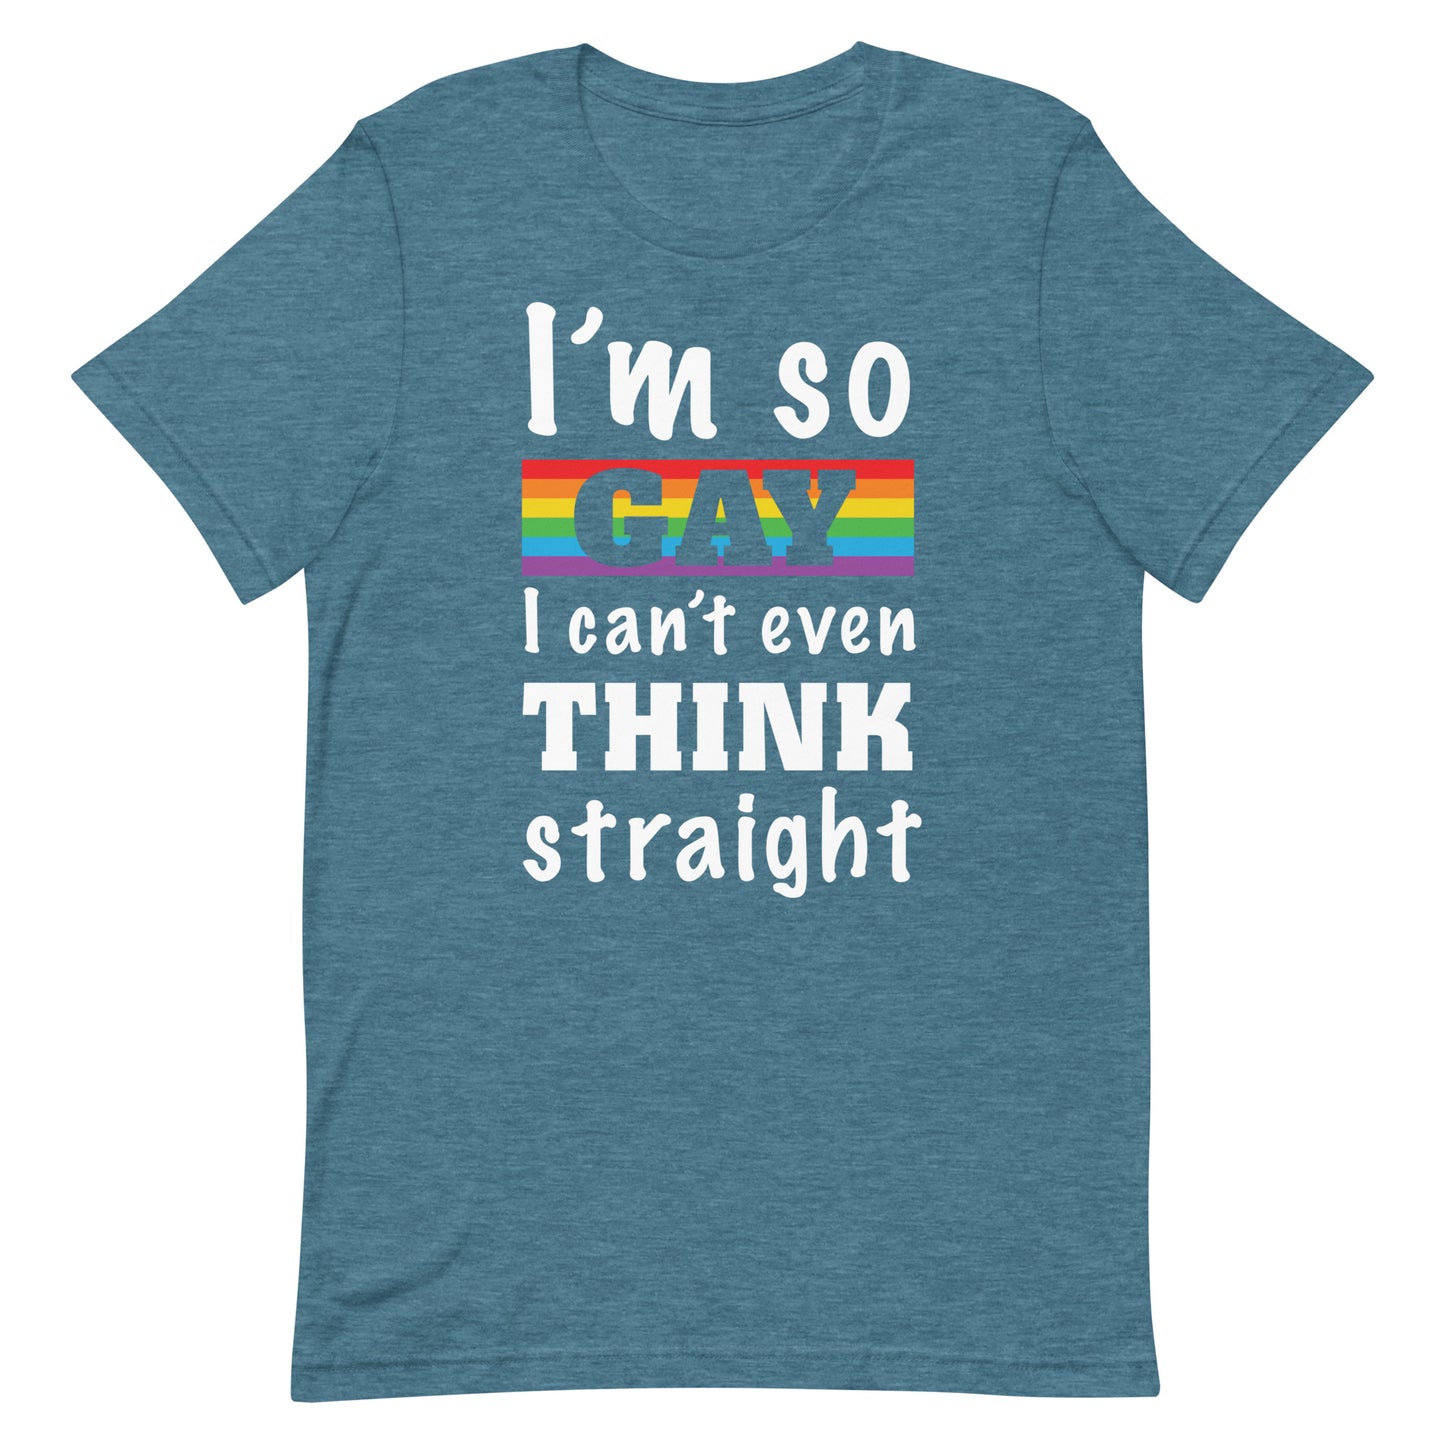 I'm So Gay I Even Can't Think Straight LGBTQ Pride t-shirt